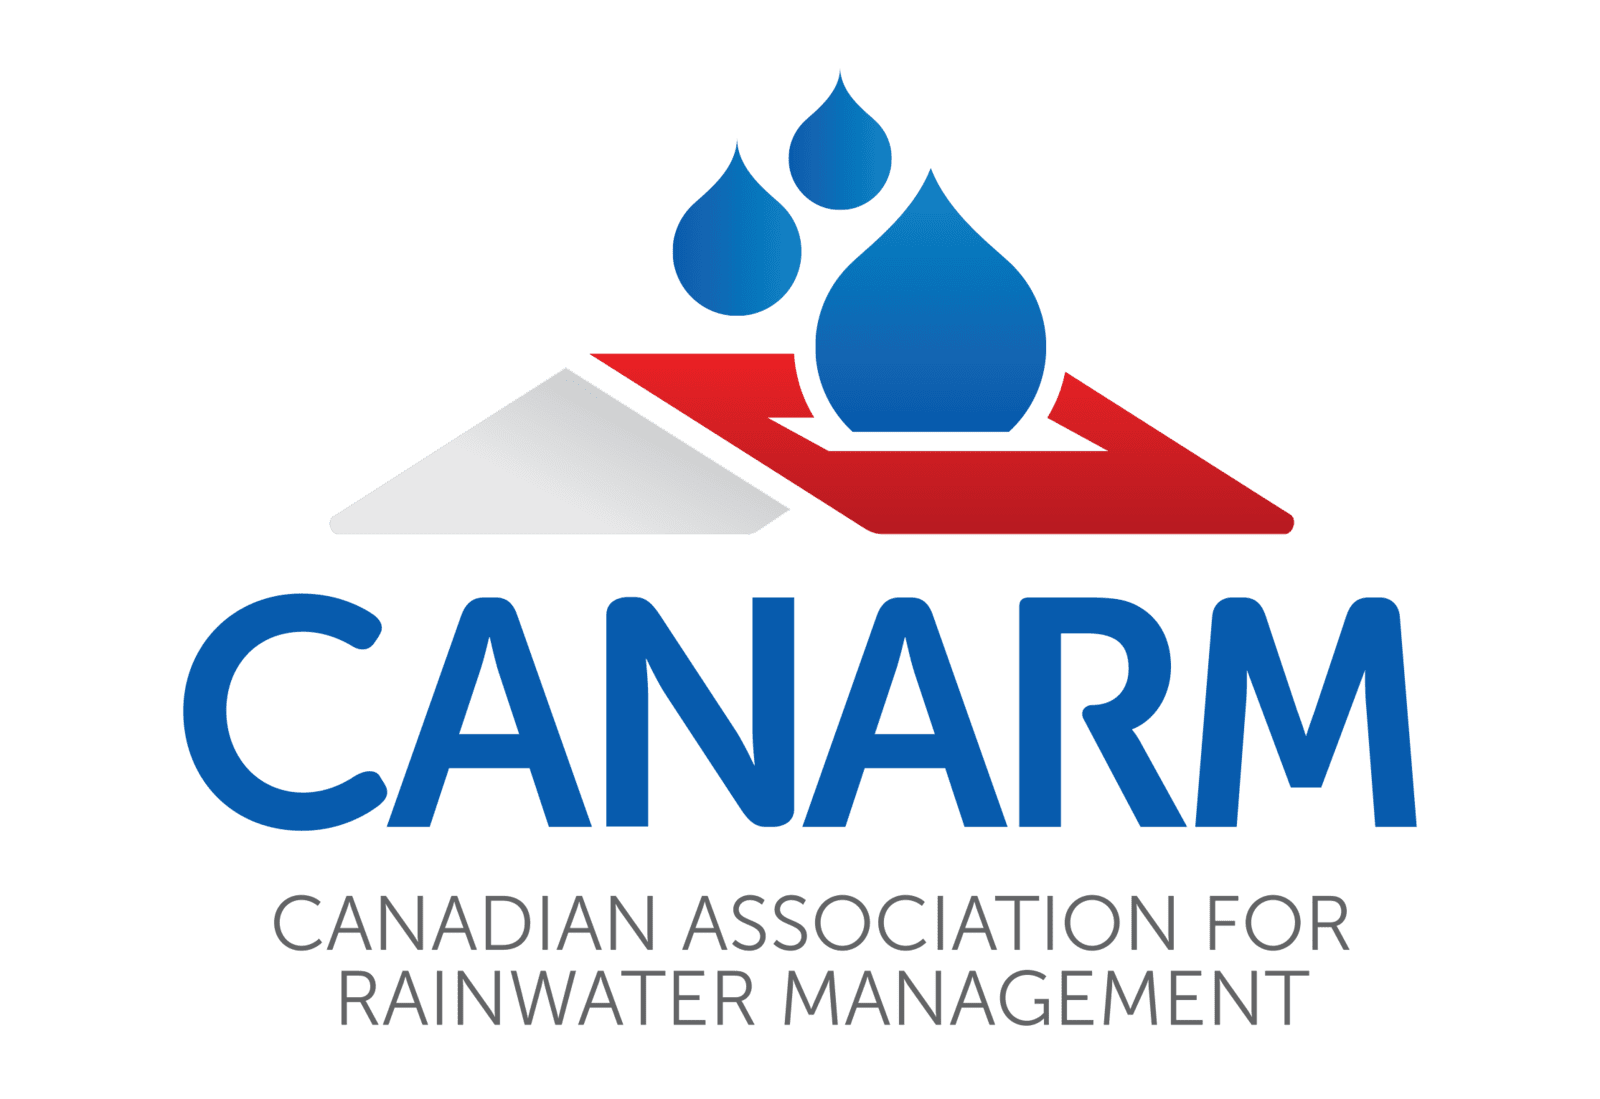 Canadian Association for Rainwater Management logo